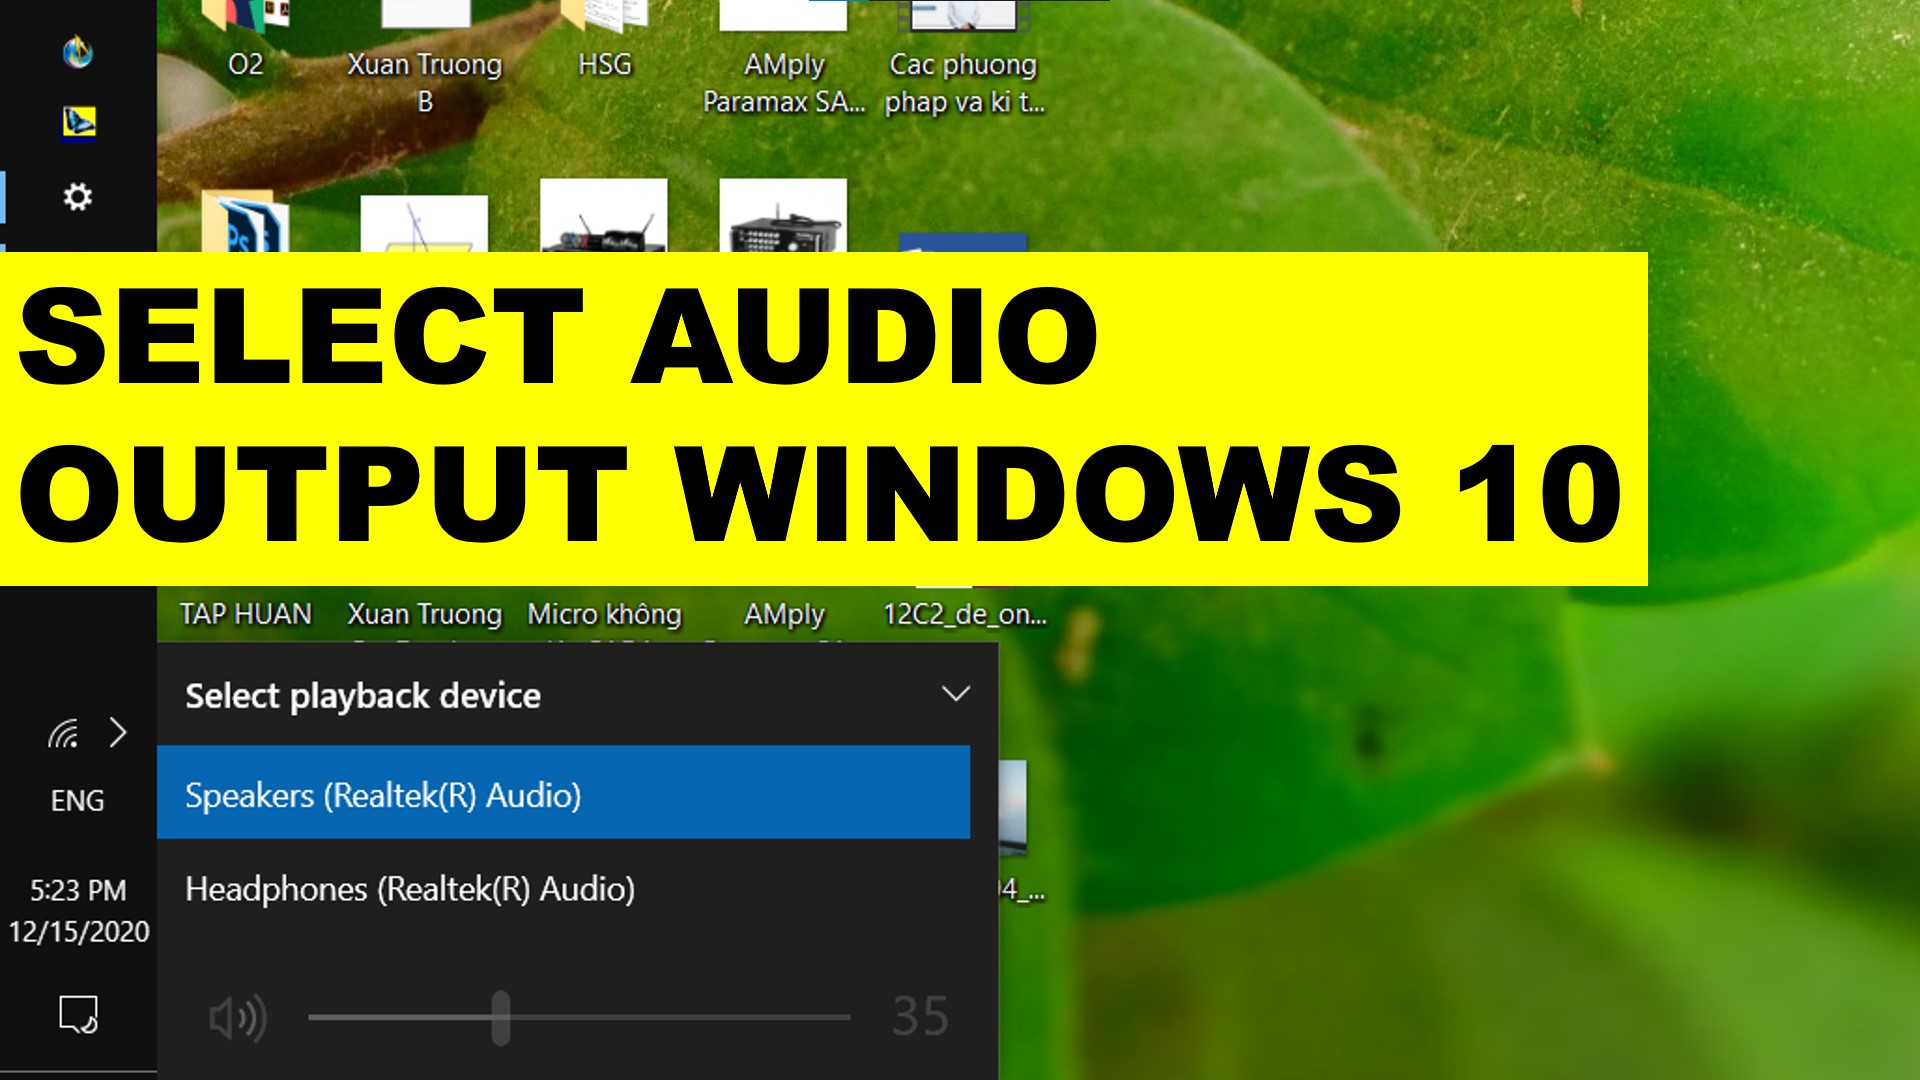 Select Audio Output Windows 10 (Speakers, Headphones, HDMI, Bluetooth)